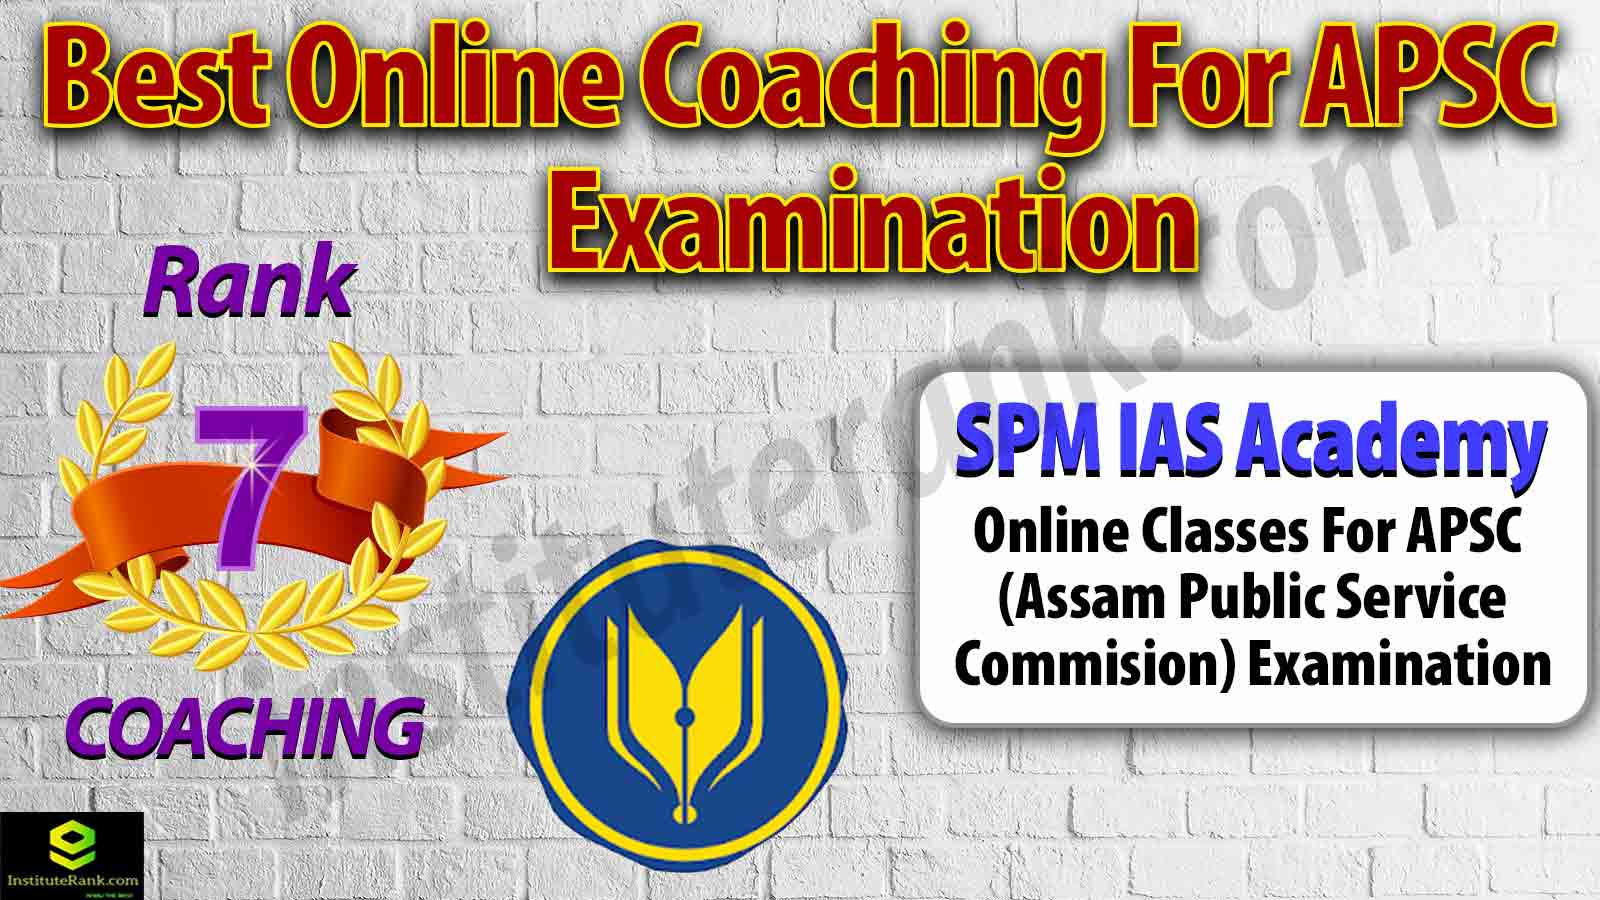 Online Coaching Centre for APSC Examination